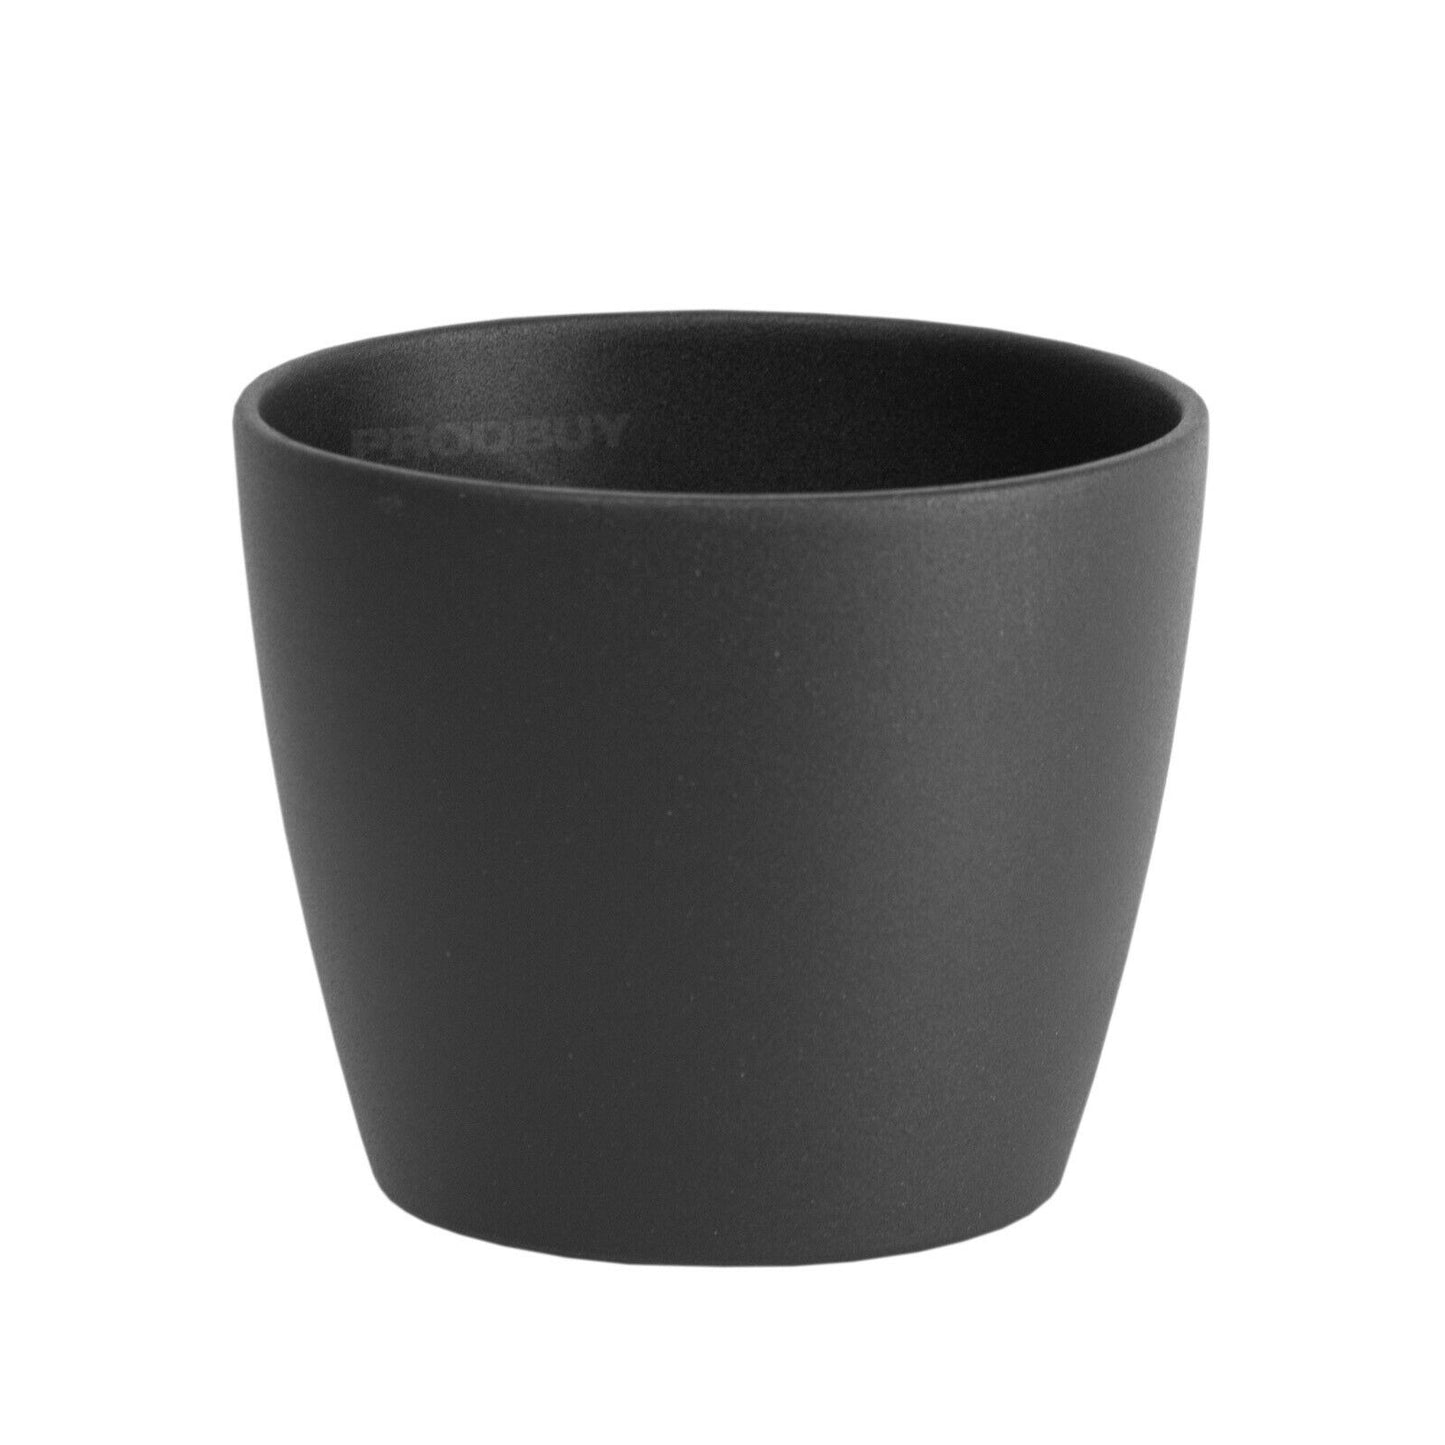 Small 12cm Plain Ceramic Plant Pot Cover